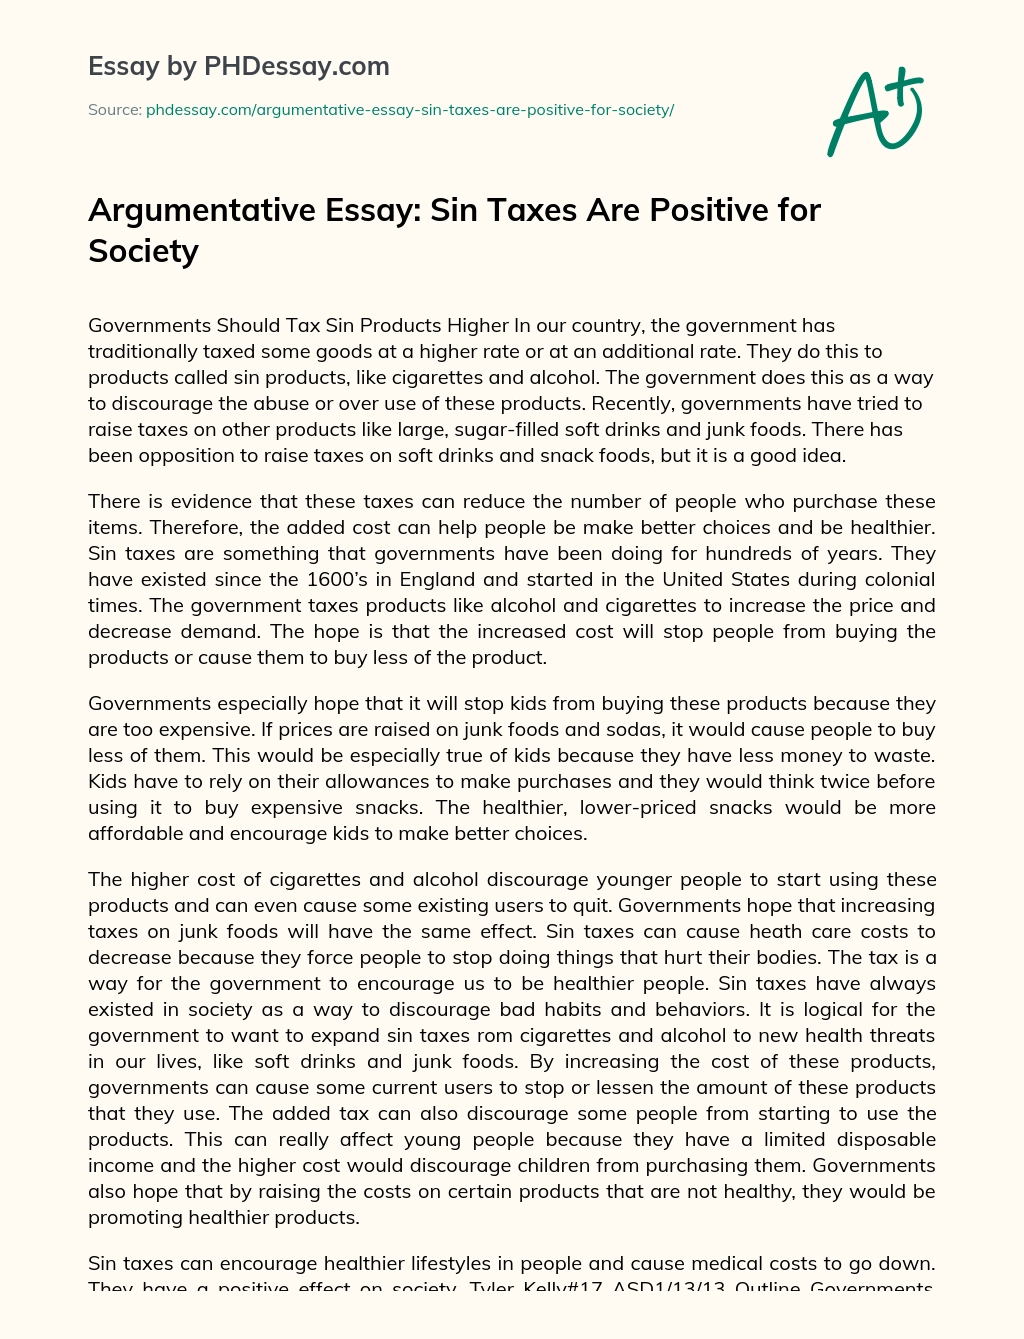 Argumentative Essay: Sin Taxes Are Positive for Society essay